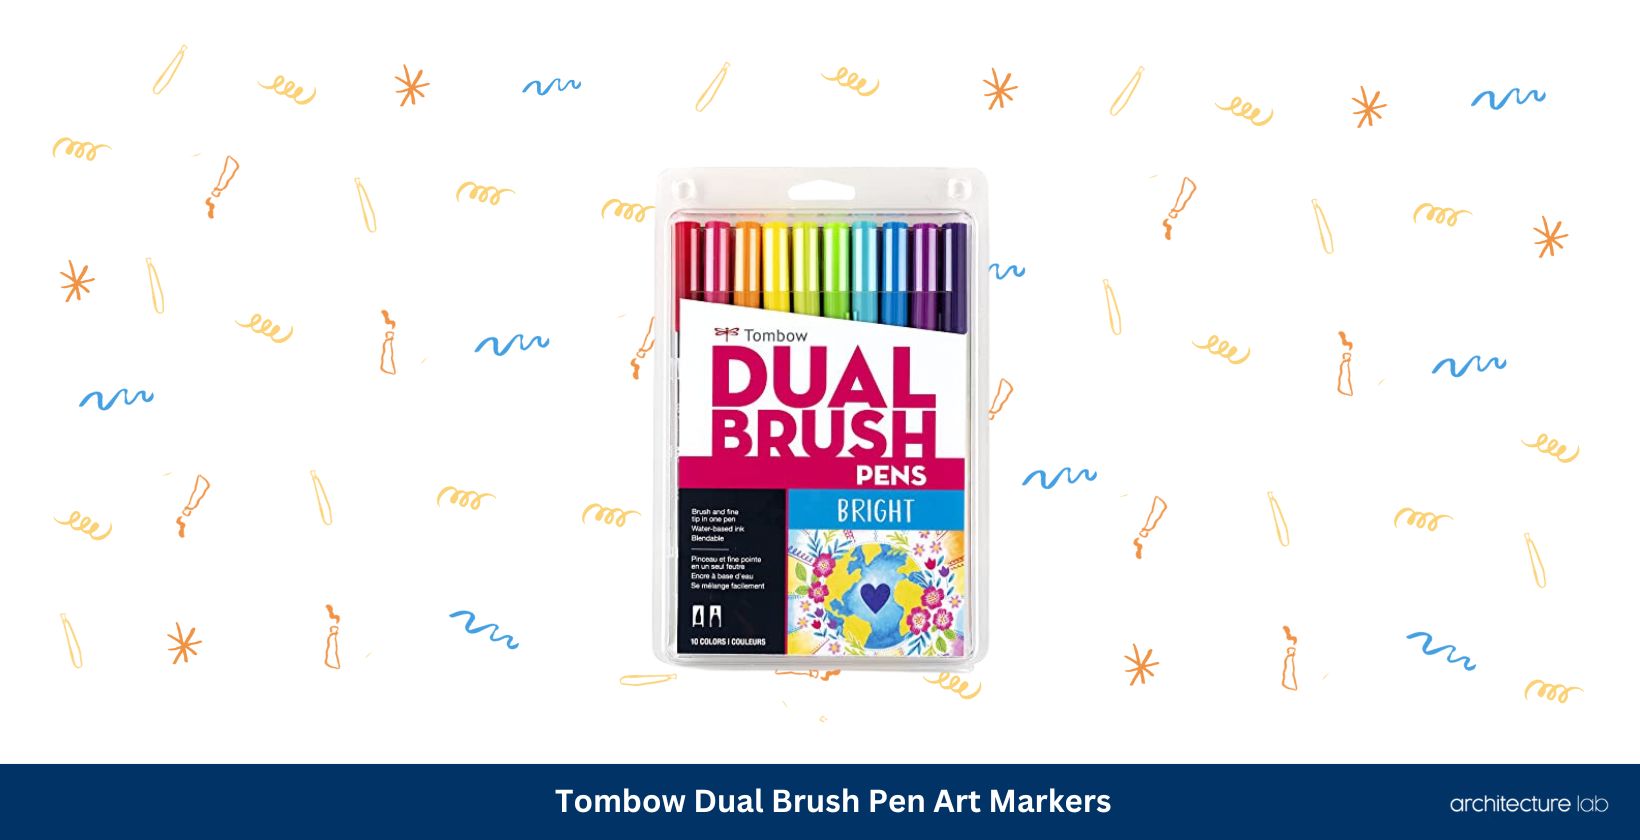 Tombow dual brush pen art markers